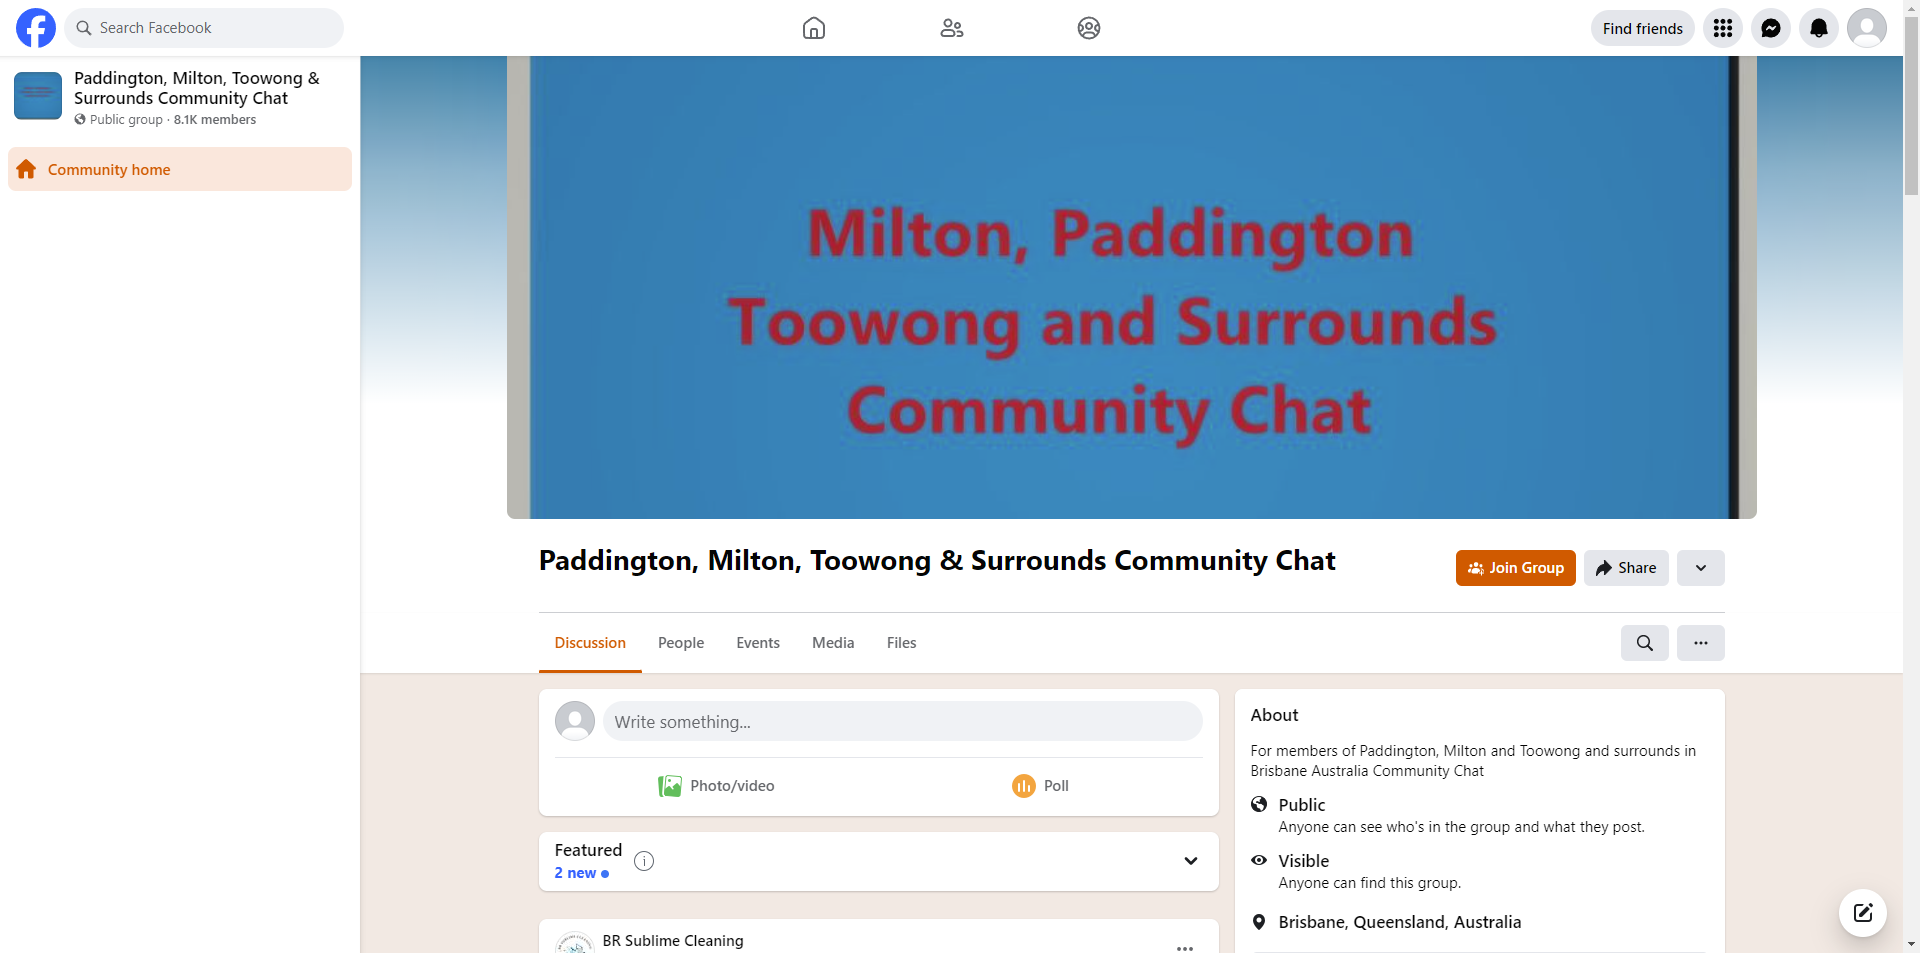 Paddington, Milton, Toowong & Surrounds Community Chat